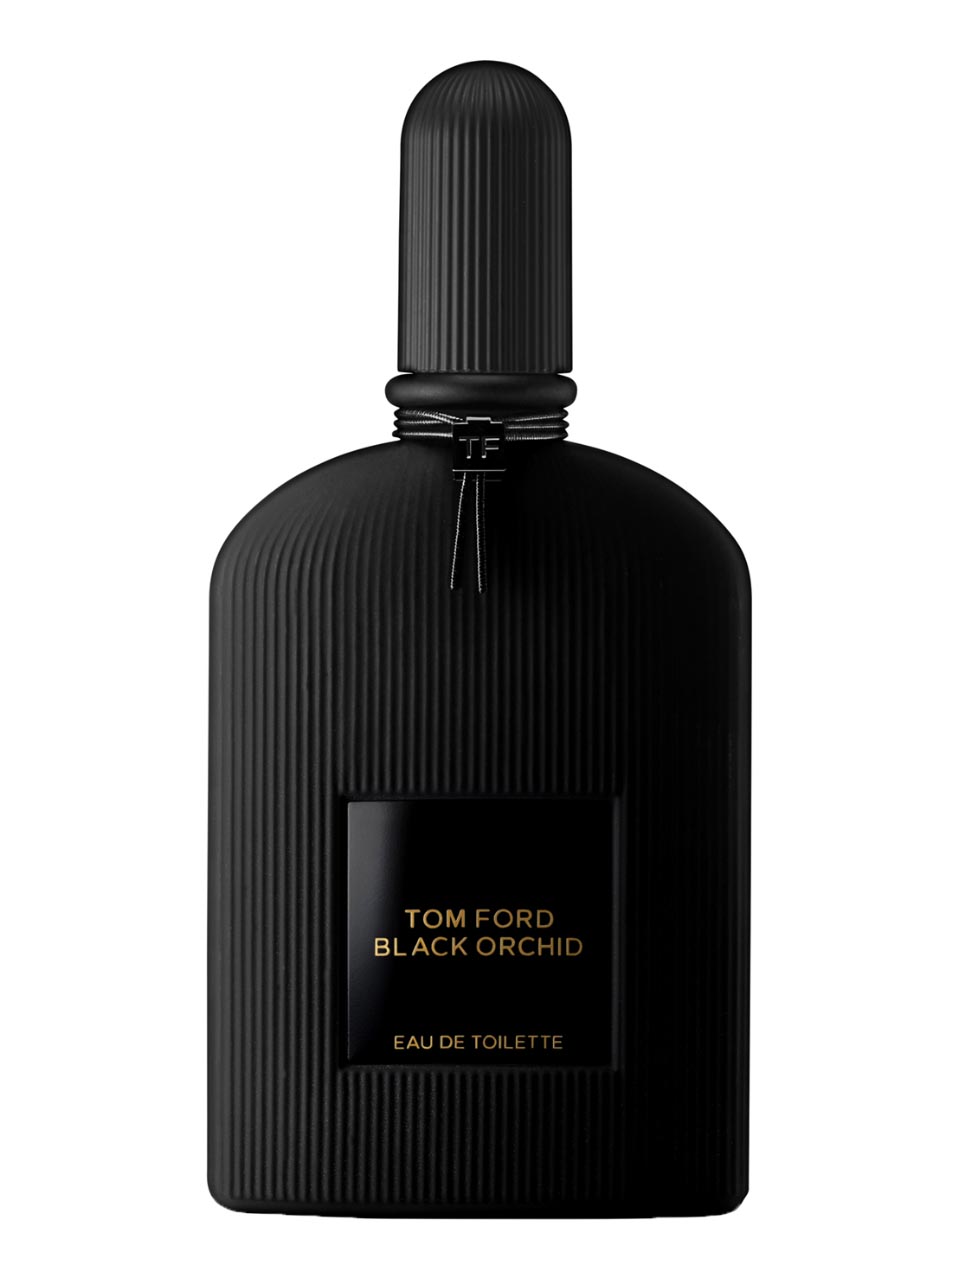 Tom Ford Black Orchid Eau de Toilette 50 ml null - onesize - 1